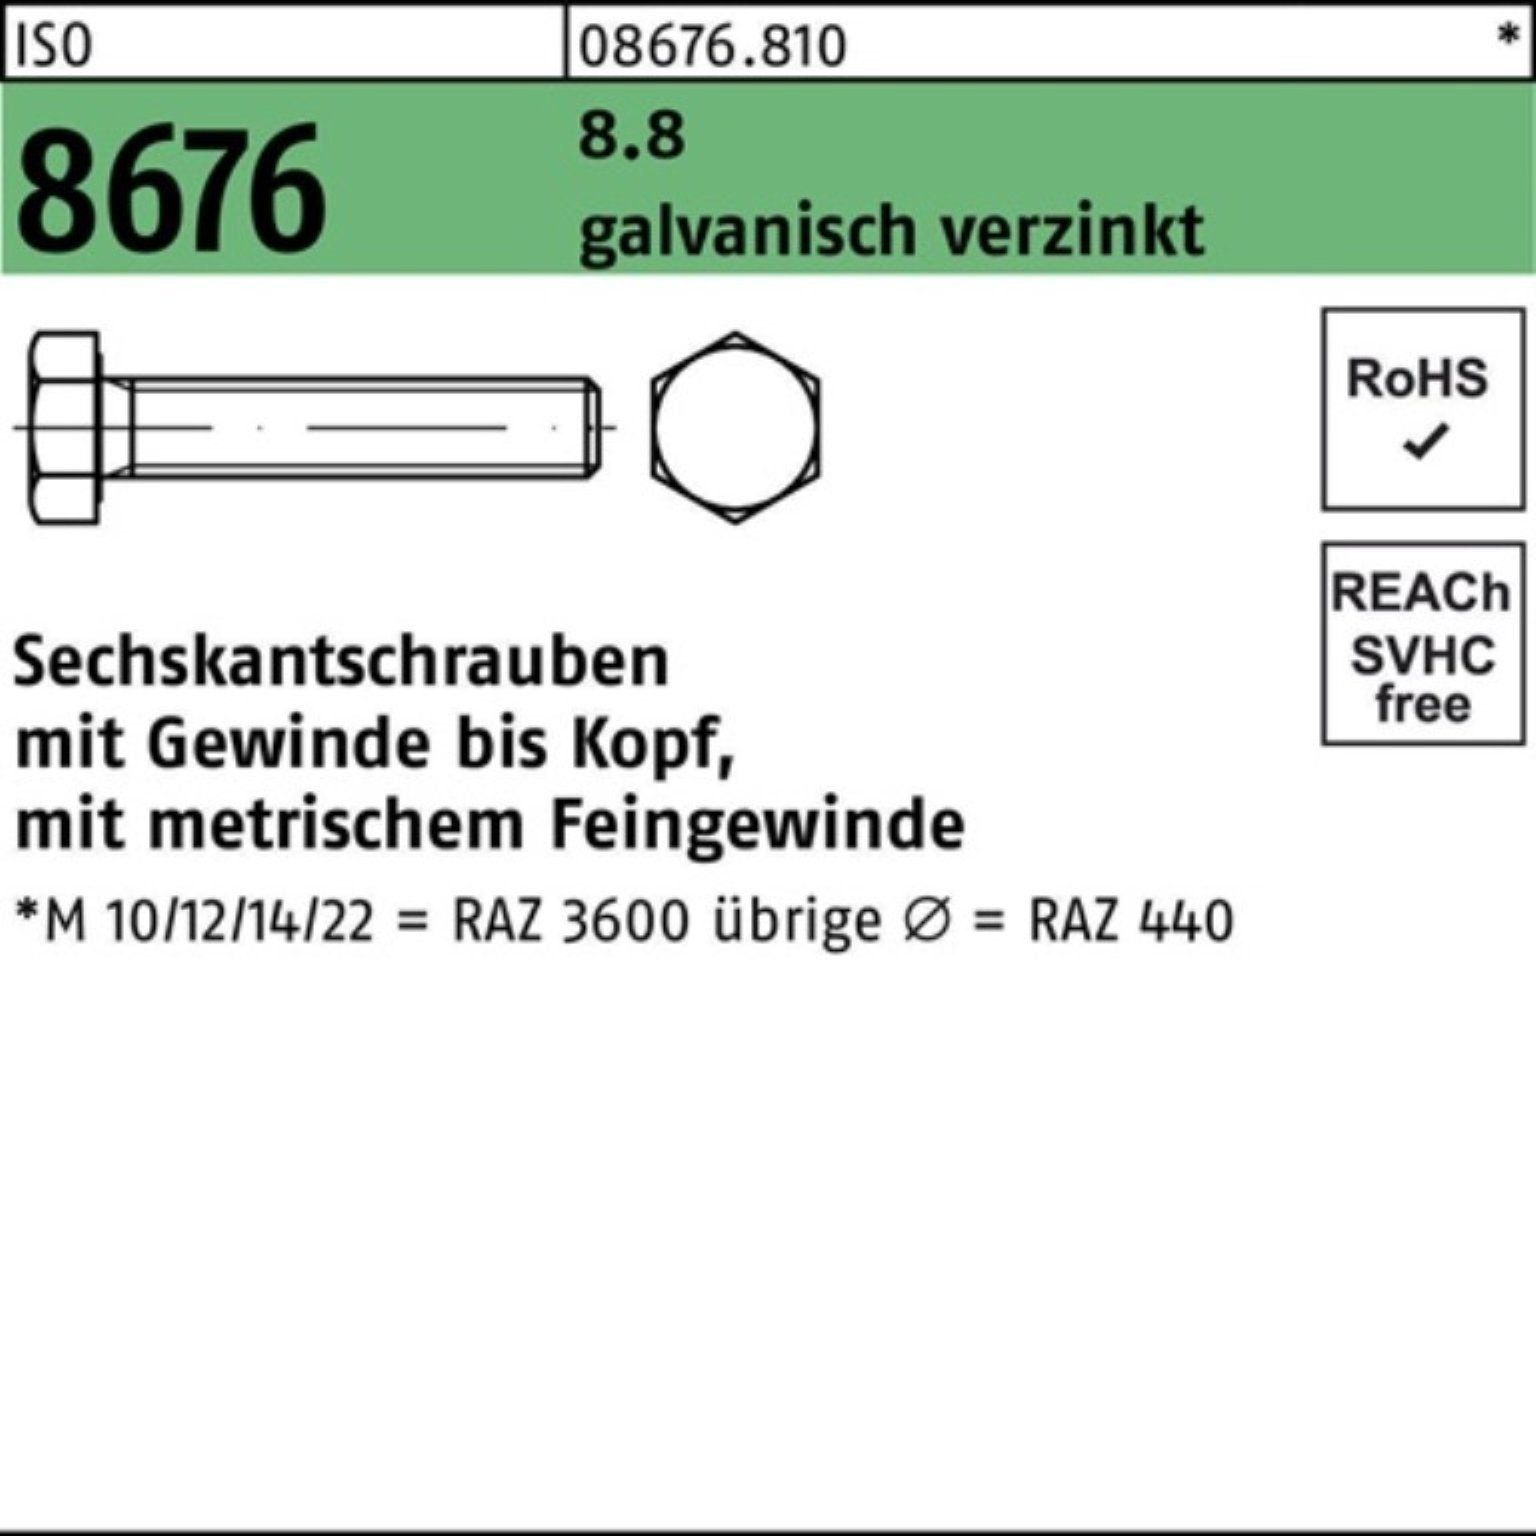 80 Pack Sechskantschraube 50 Reyher 8676 Sechskantschraube VG M12x1,5x 8.8 galv.verz. ISO 100er